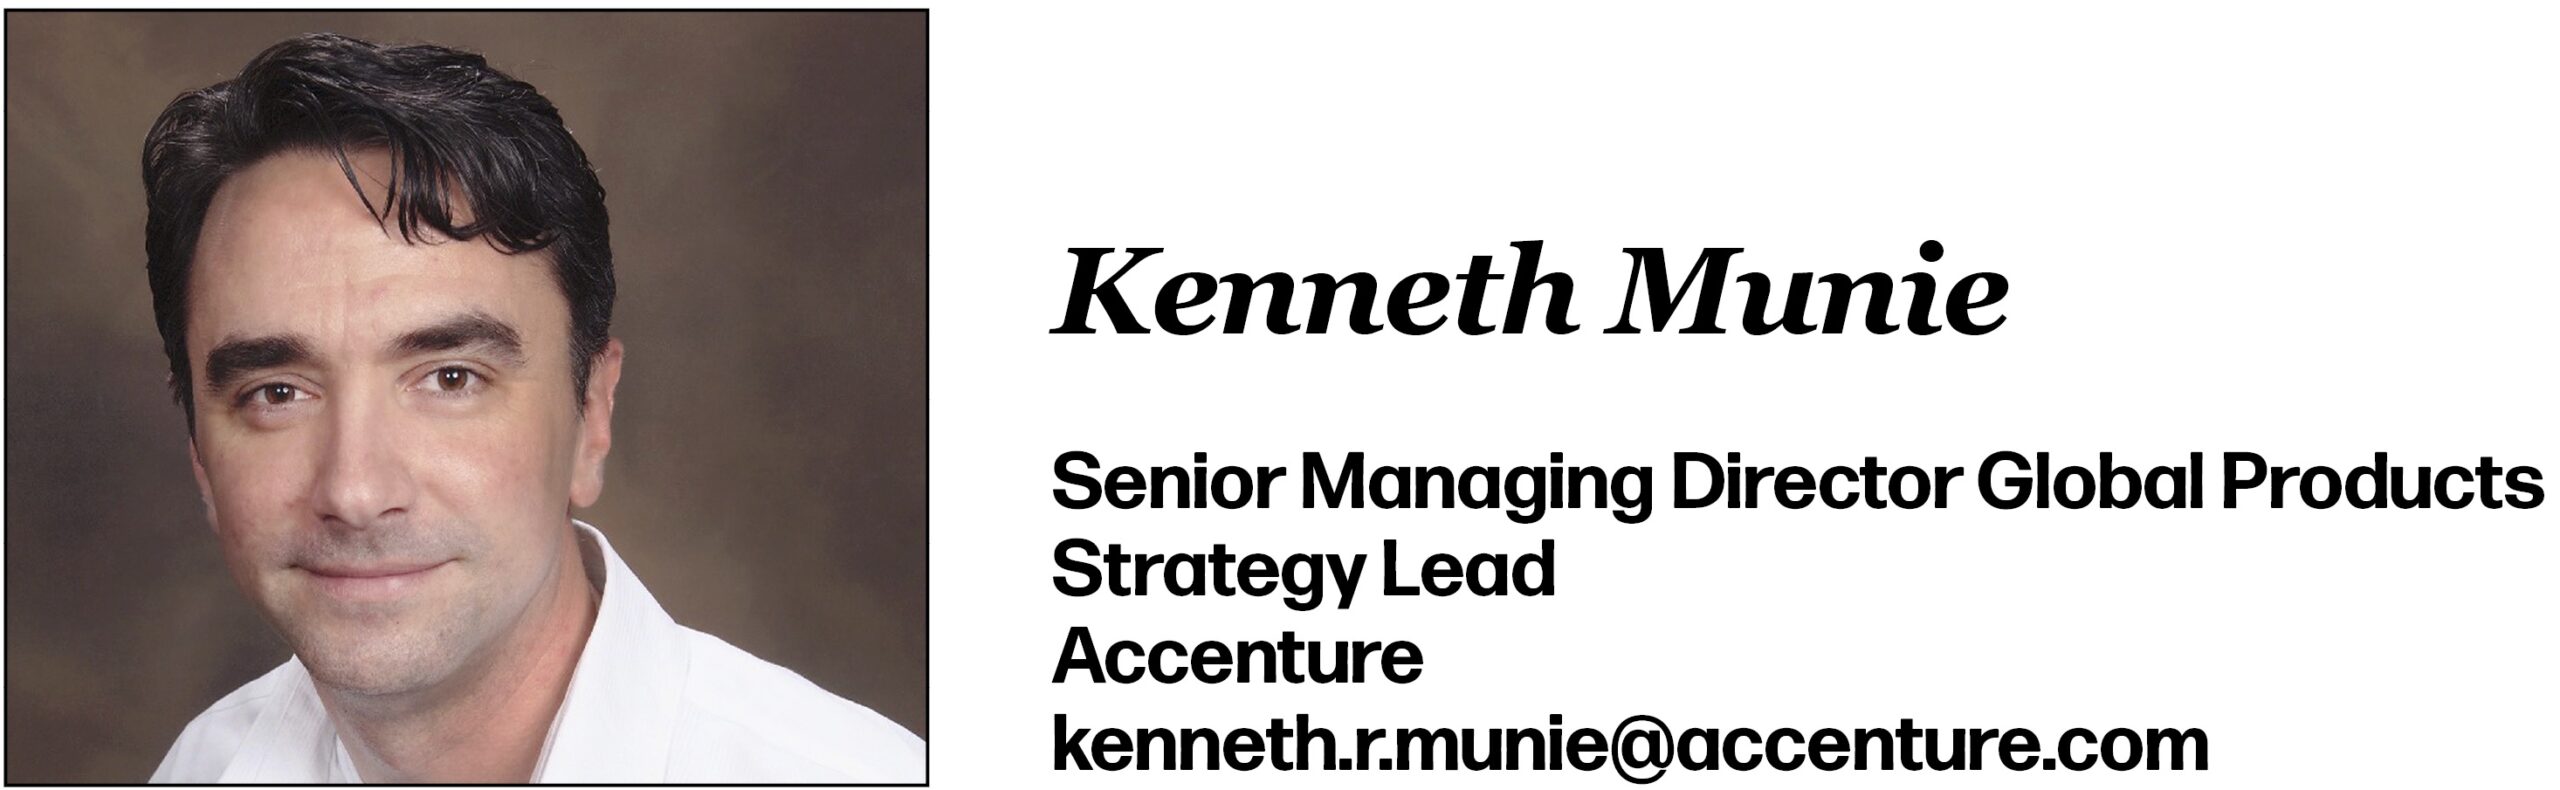 Kenneth Munie Senior Managing Director Global Products Strategy Lead Accenture kenneth.r.munie@accenture.com 